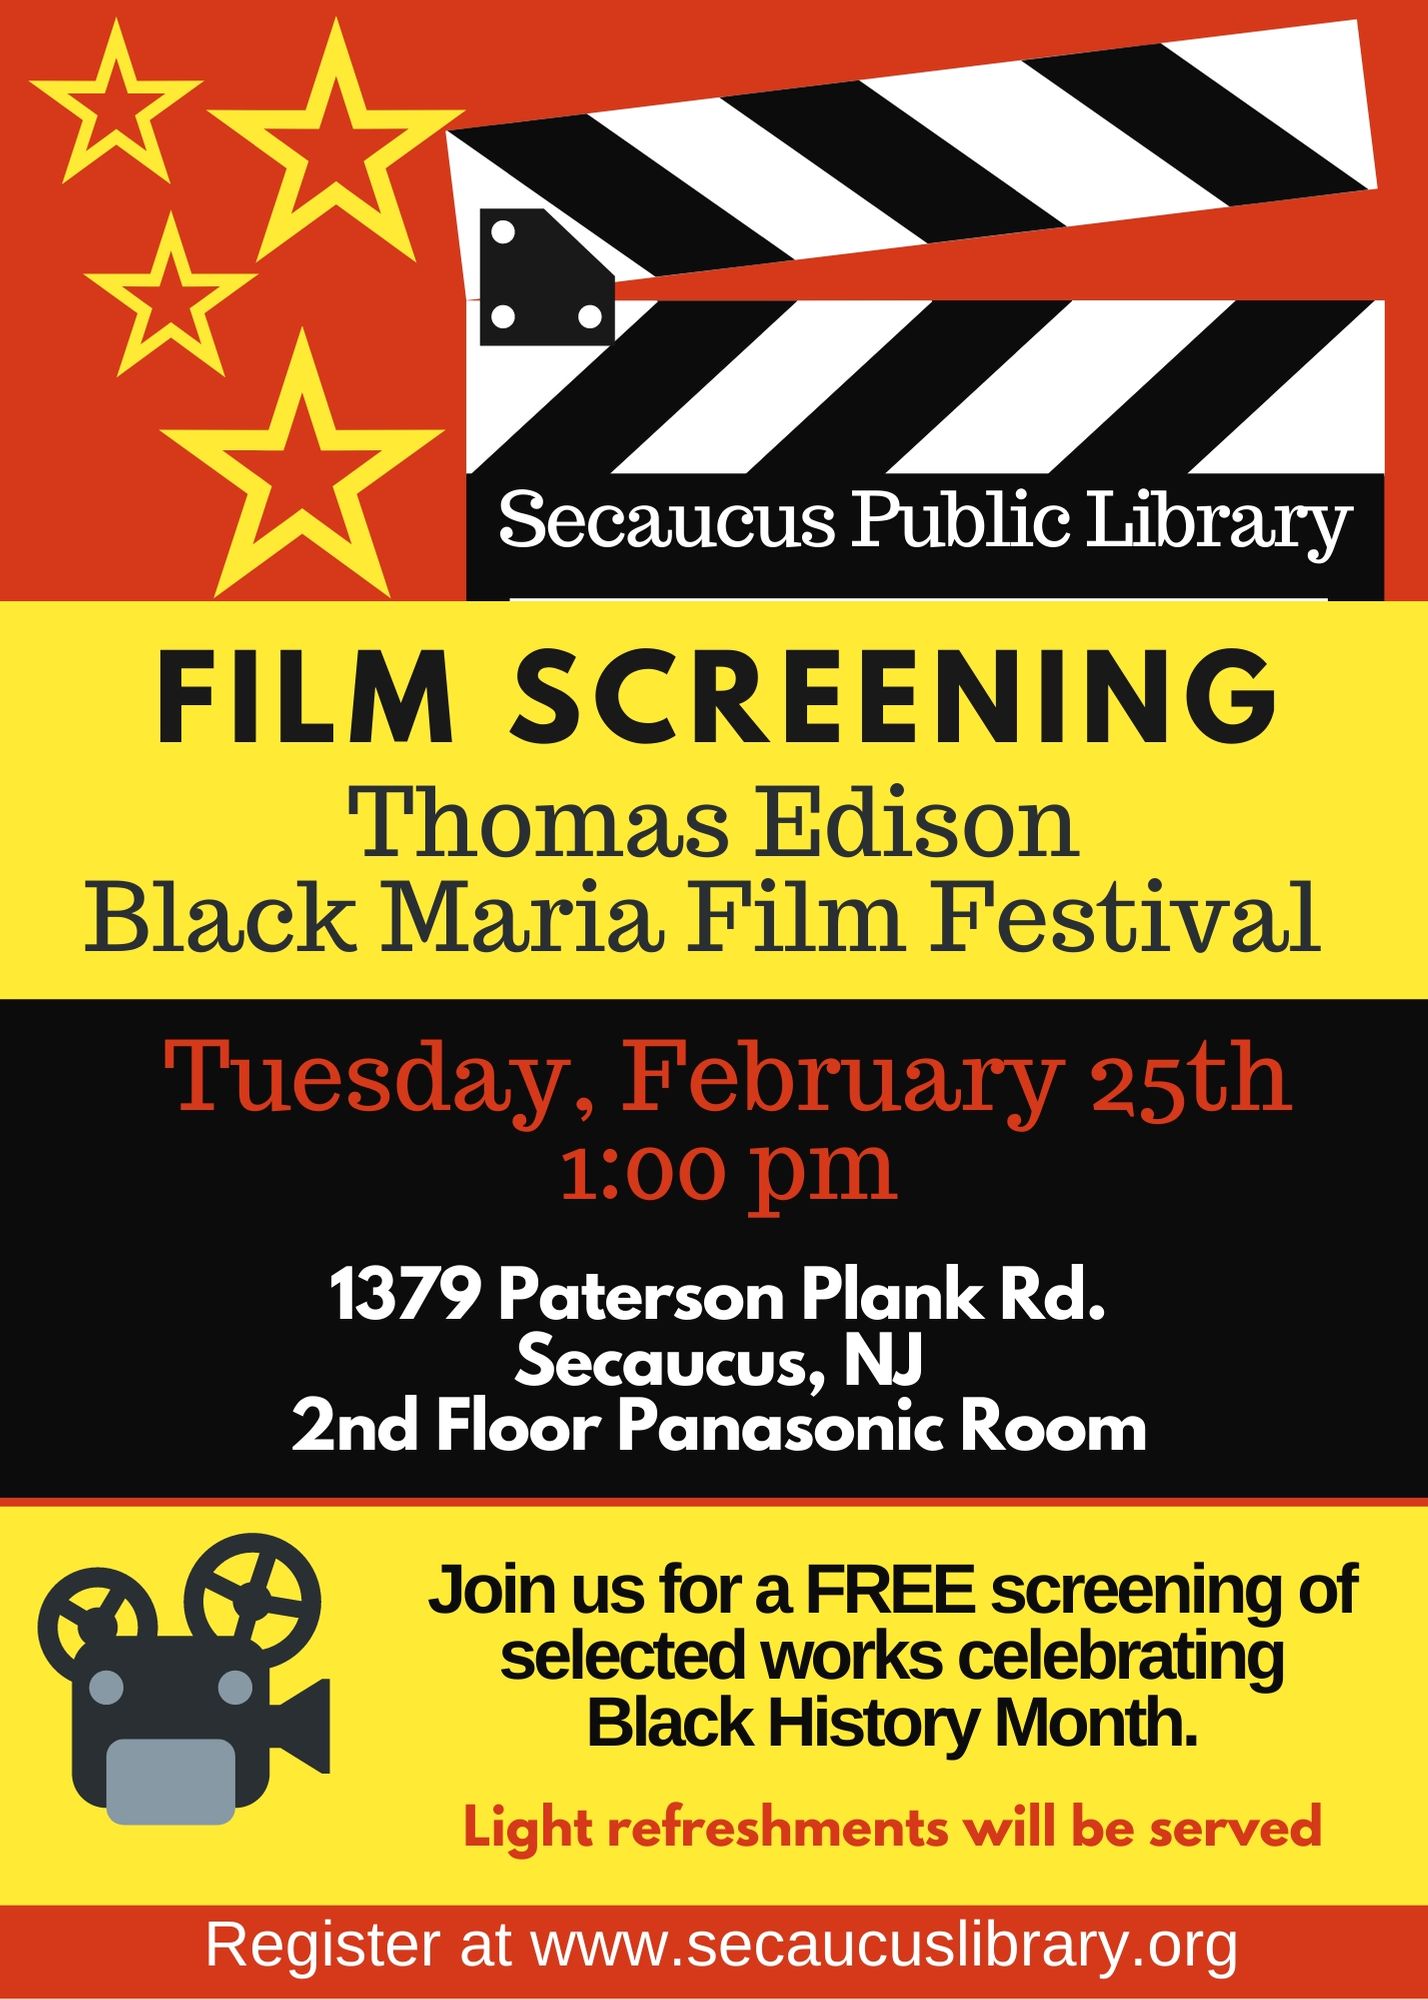 Flyer for Secaucus Public Library Film Screening Thomas Edison Black Maria Film Festival; Tuesday February 25th 1PM